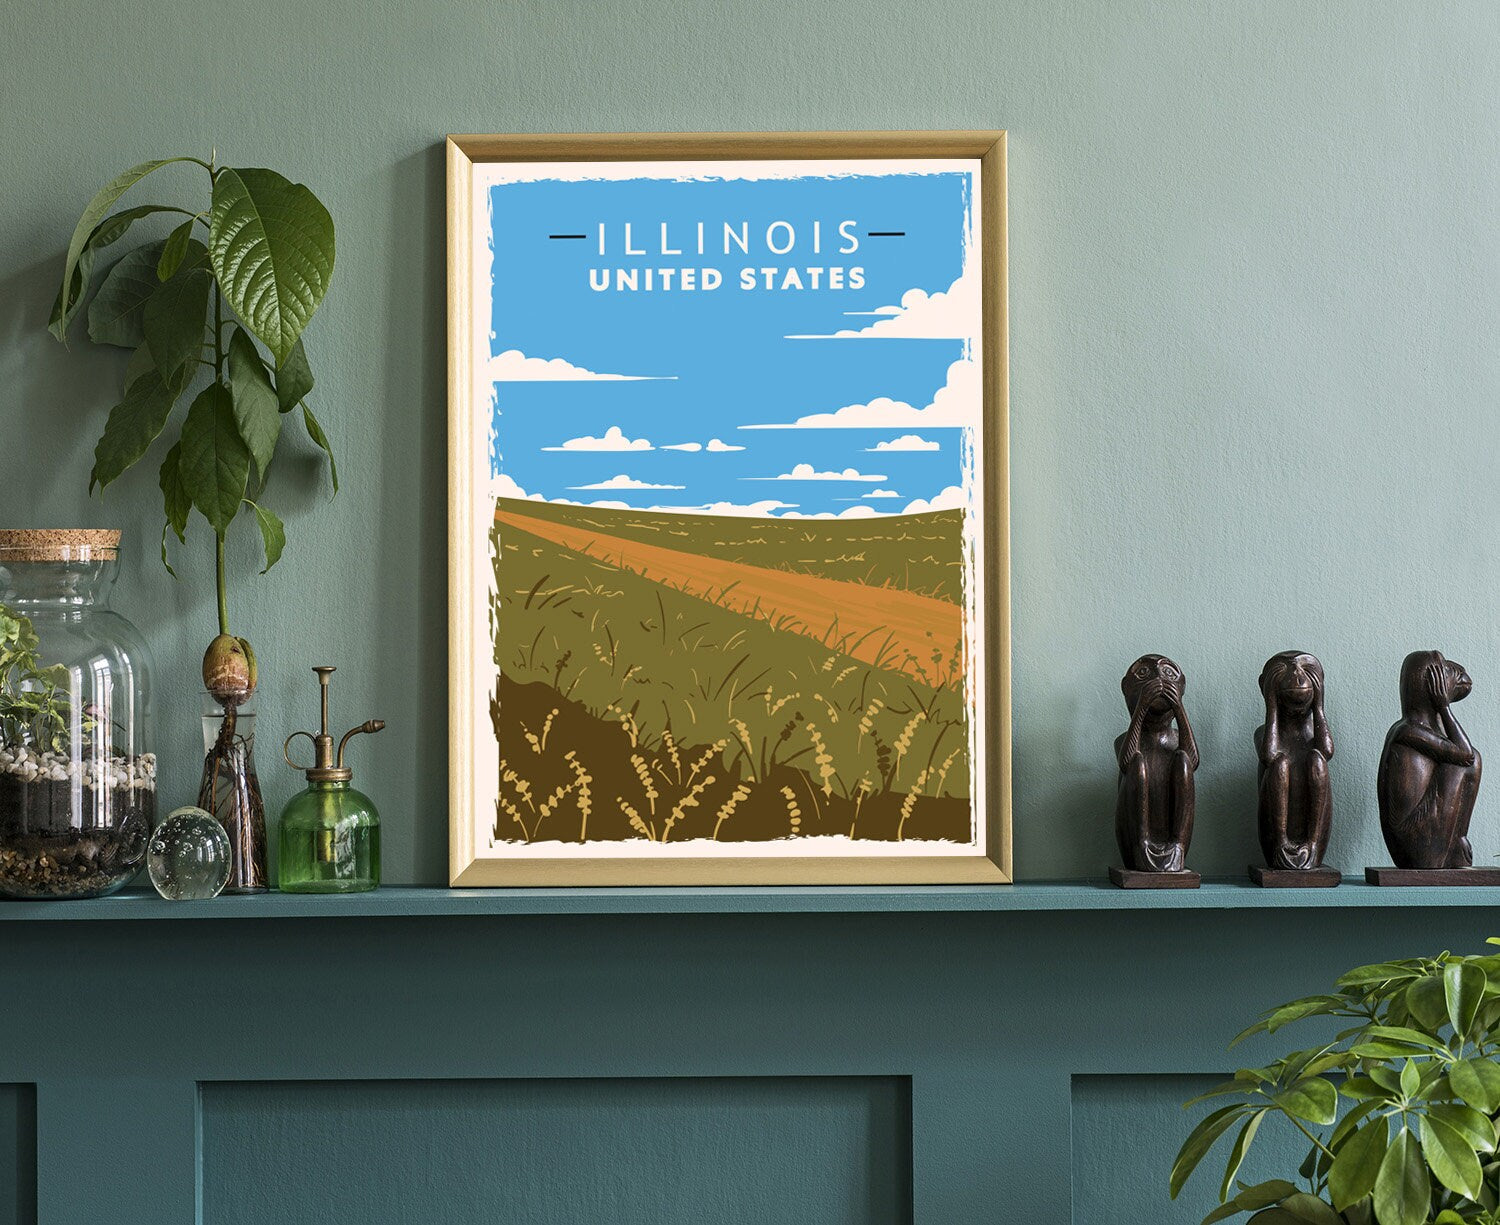 Illinois Vintage Rustic Poster Print, Retro Style Travel Poster